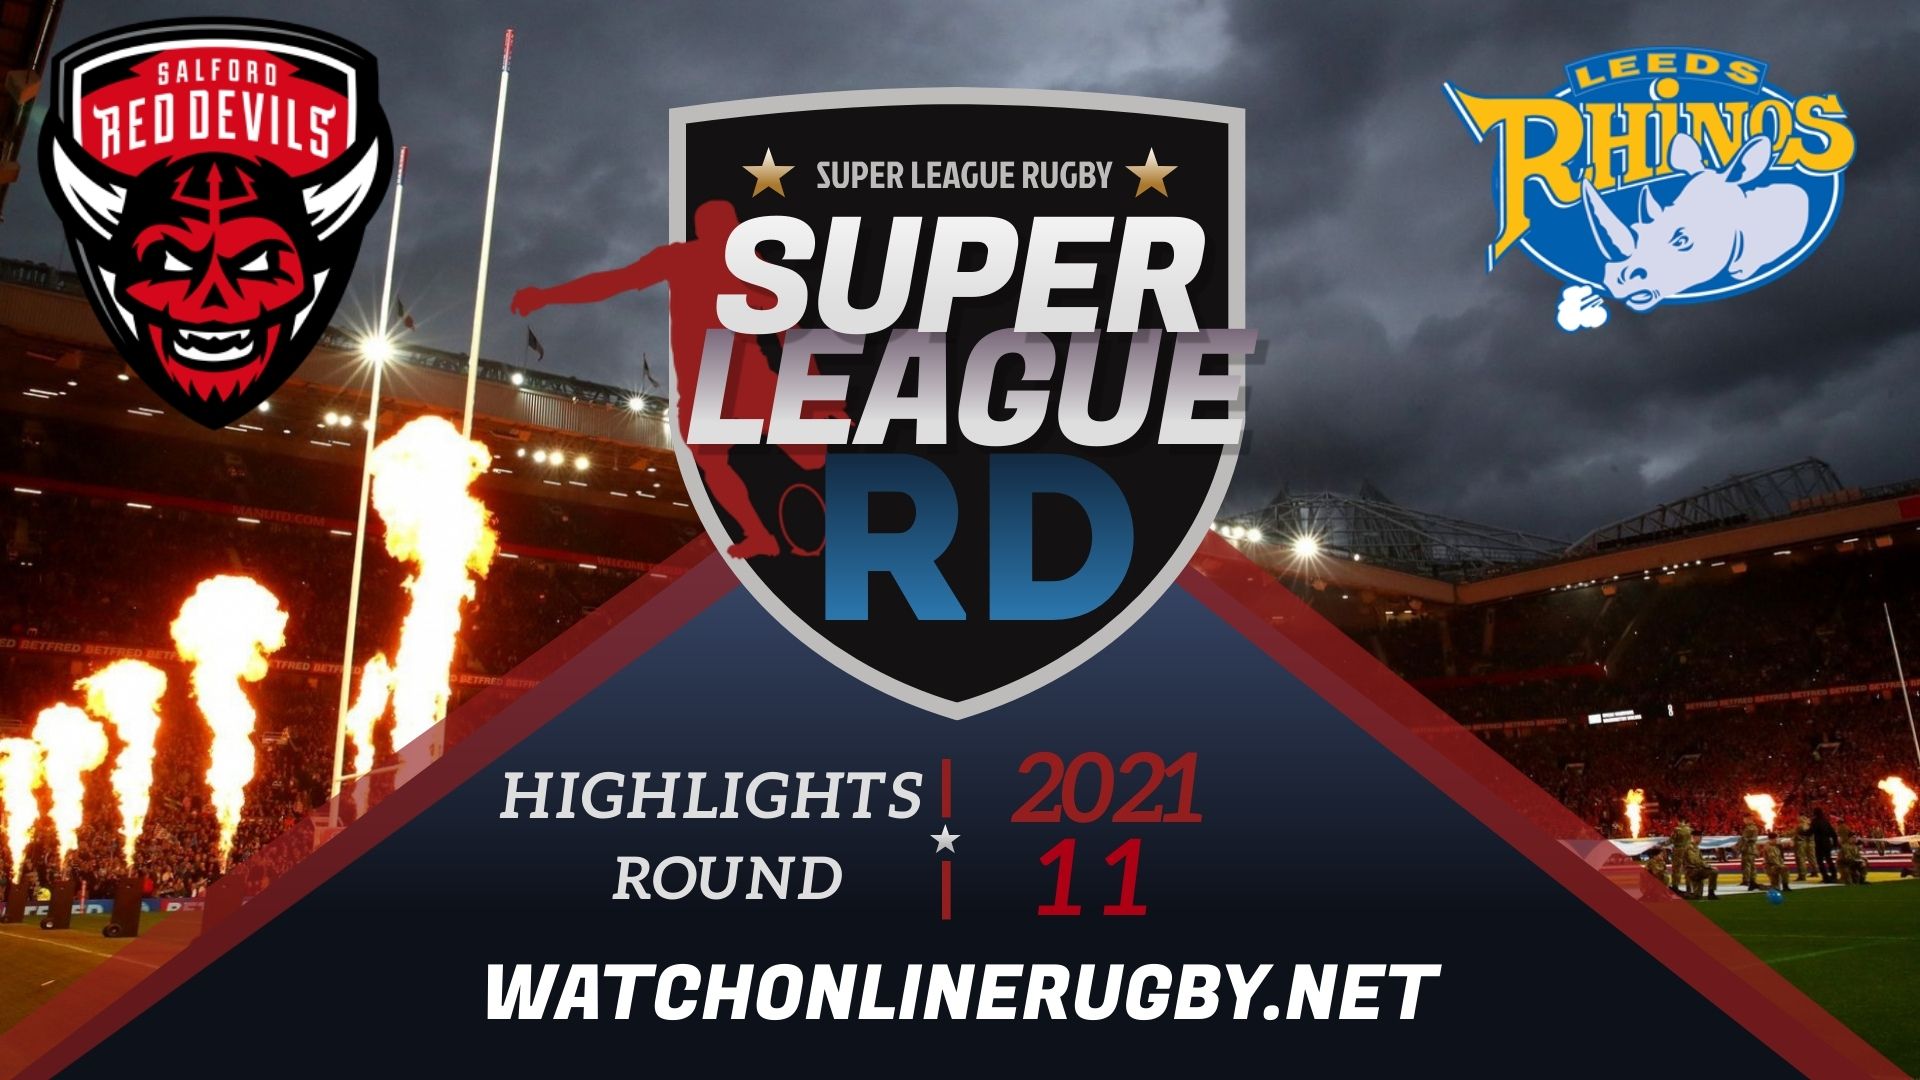 Salford Red Devils Vs Leeds Rhinos Super League Rugby 2021 RD 11